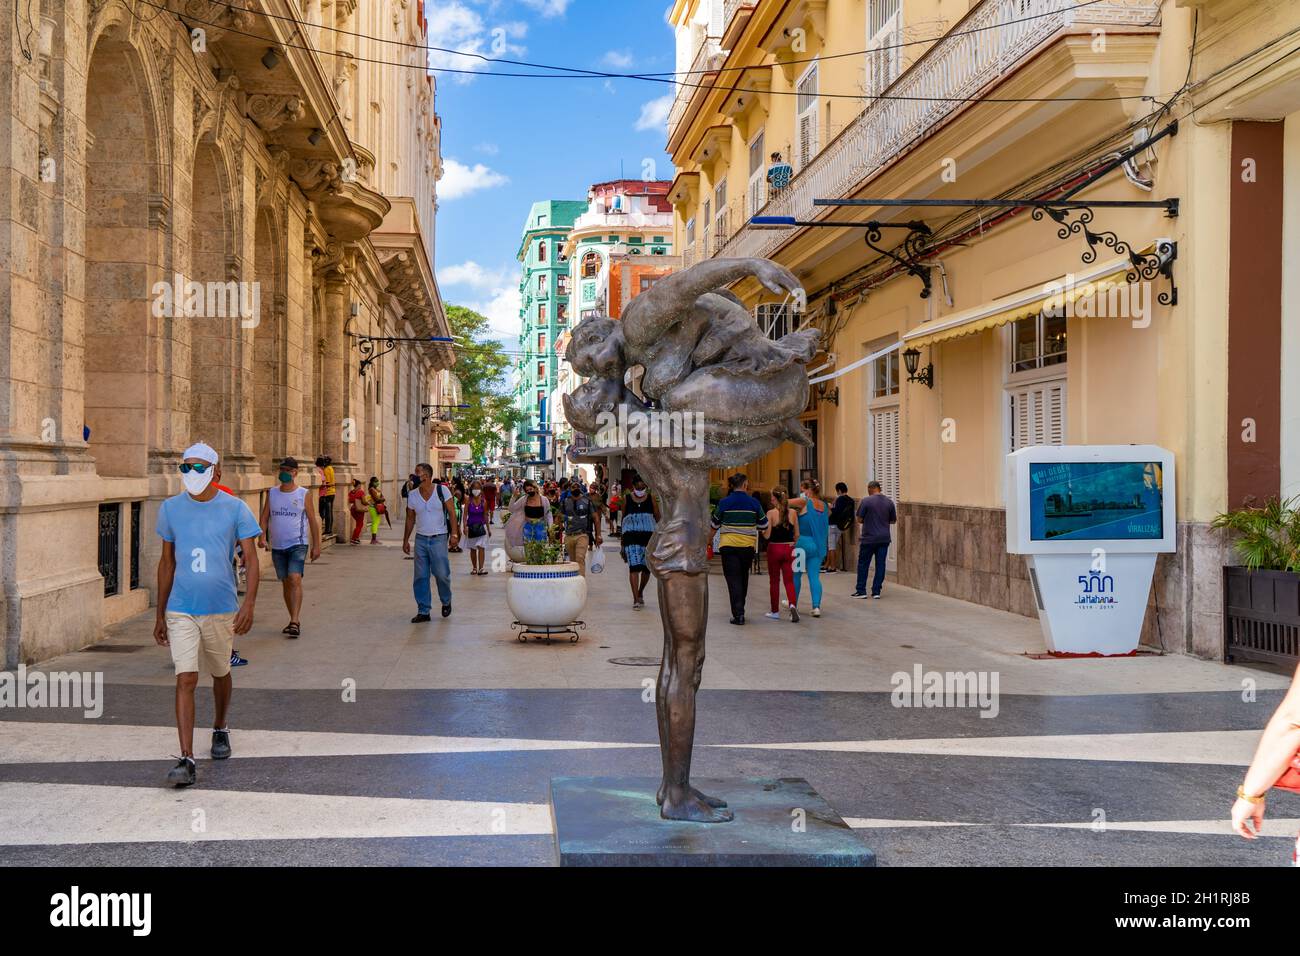 Havana Cuba. November 25, 2020: Kiss, a sculpture by the Chinese artist Xu Hongfei, on display at the entrance to the boulervar de San Rafael. Stock Photo